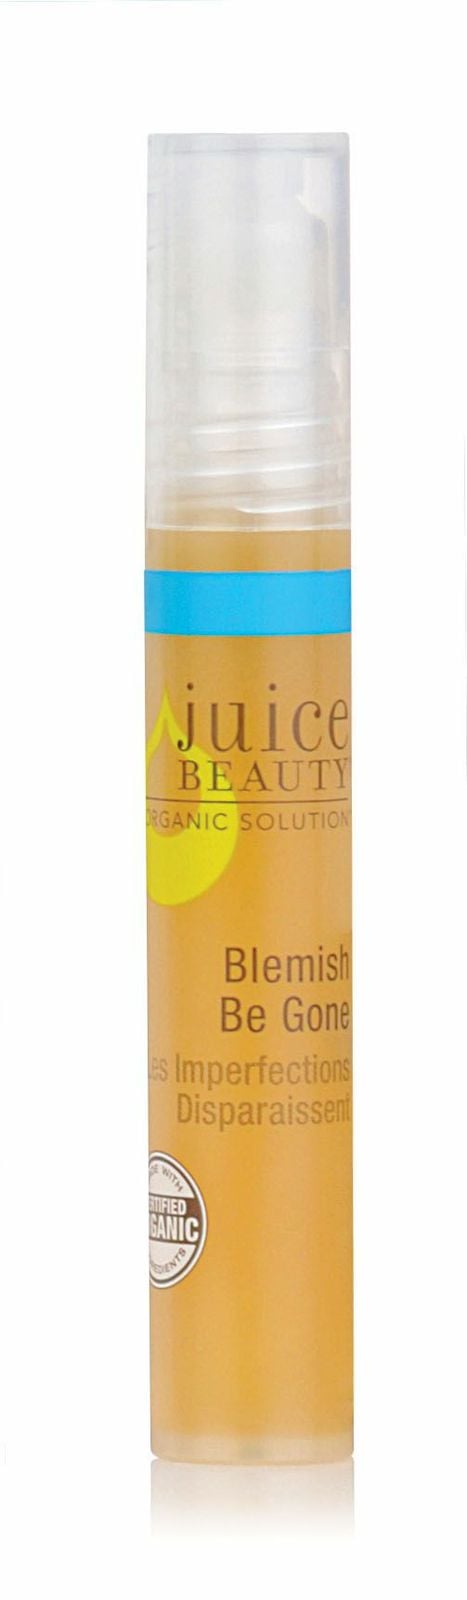 Juice Beauty Blemish Be Gone